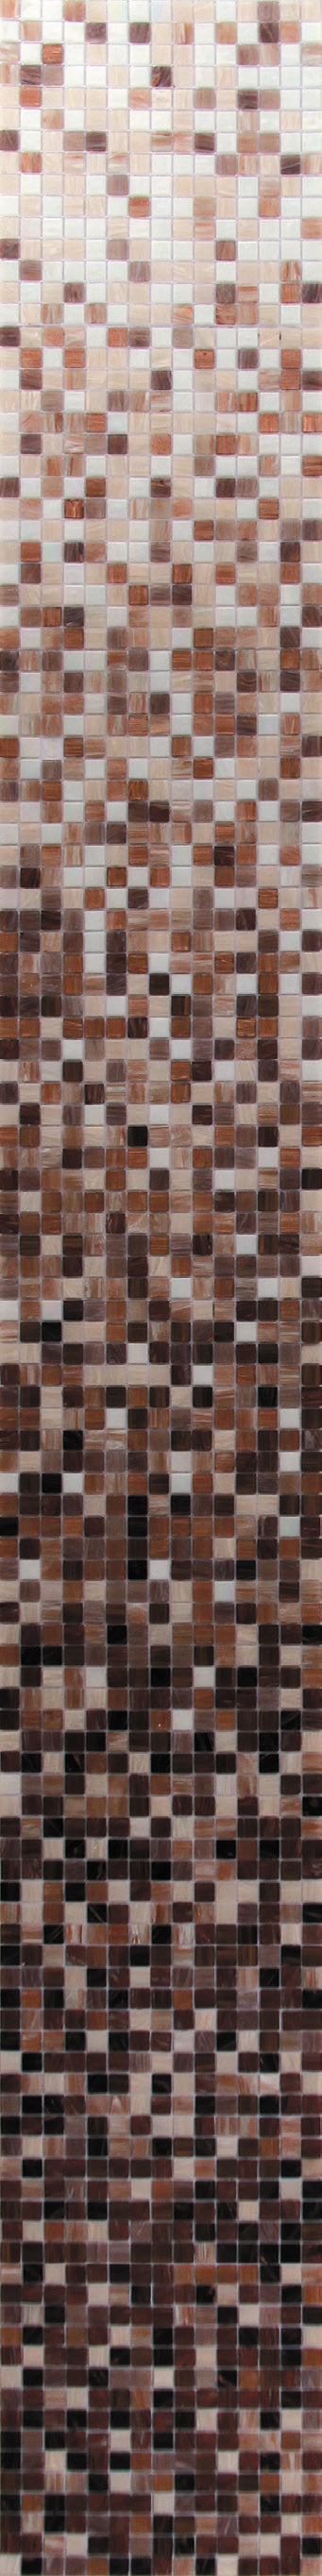 mir alma gradients 0_8 inch navajo wall and floor mosaic distributed by surface group natural materials